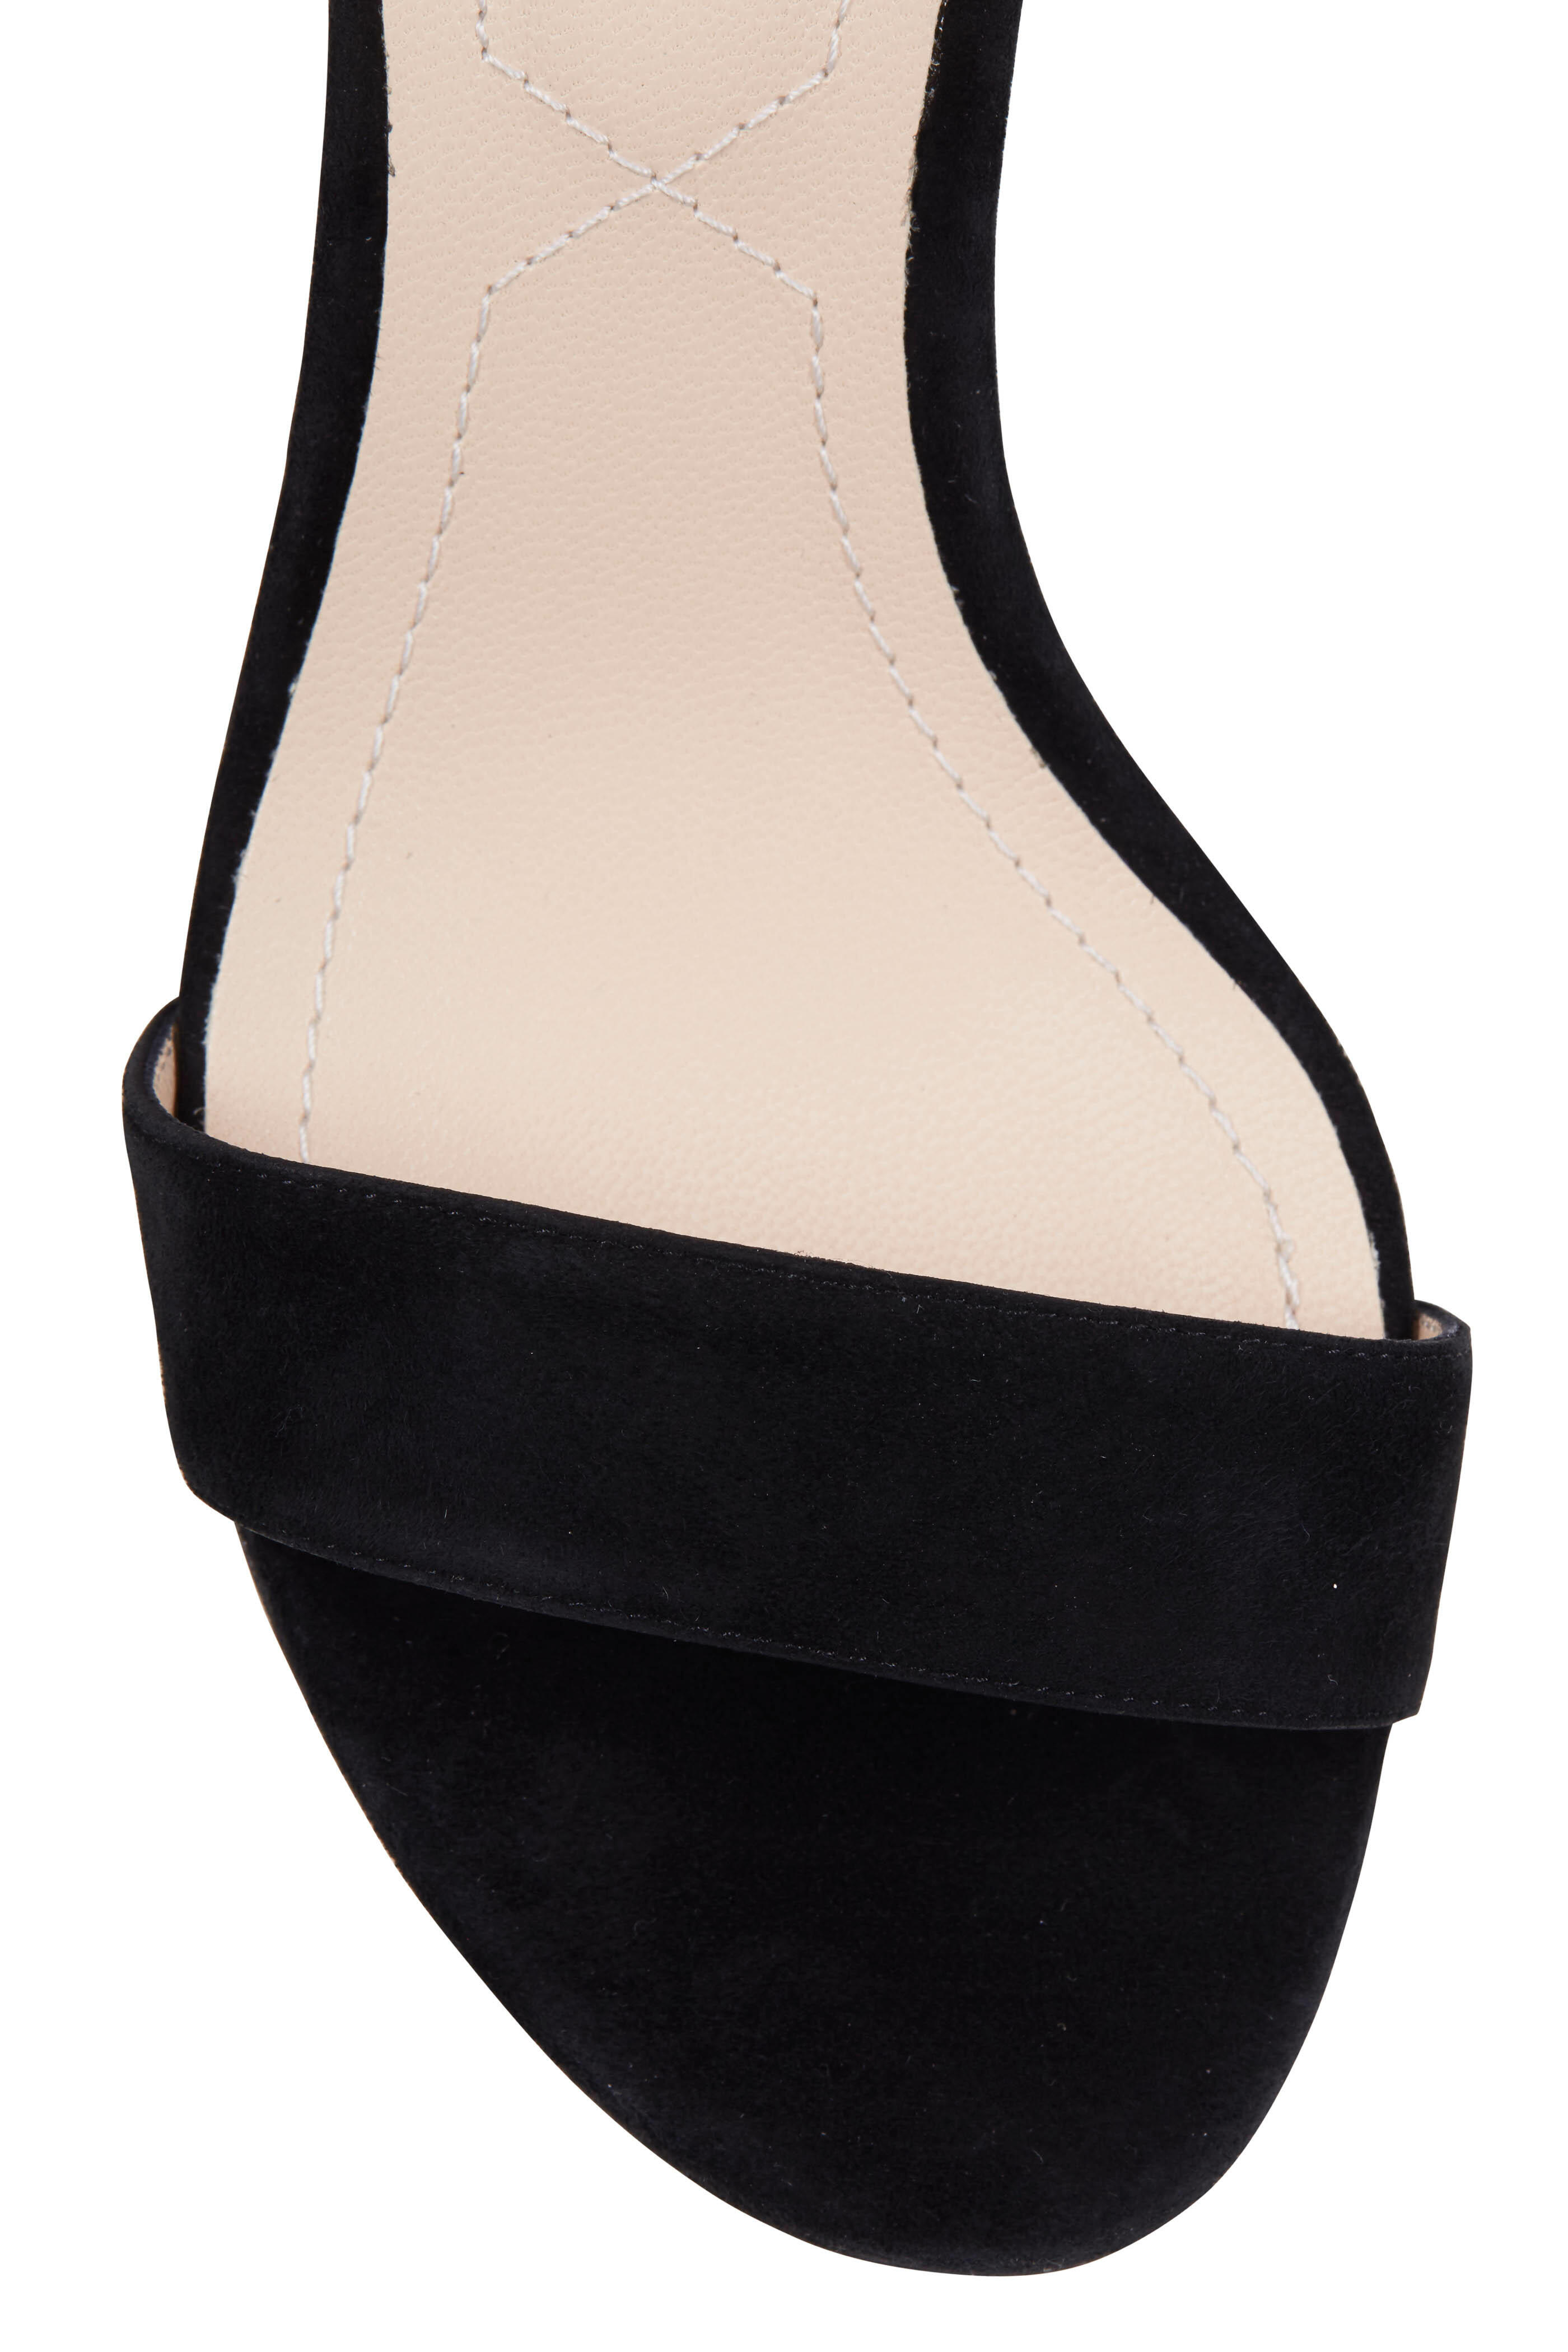 Nicholas Kirkwood Women's Pearl Nappa Black Ankle-High Leather Slingback -  9 M 